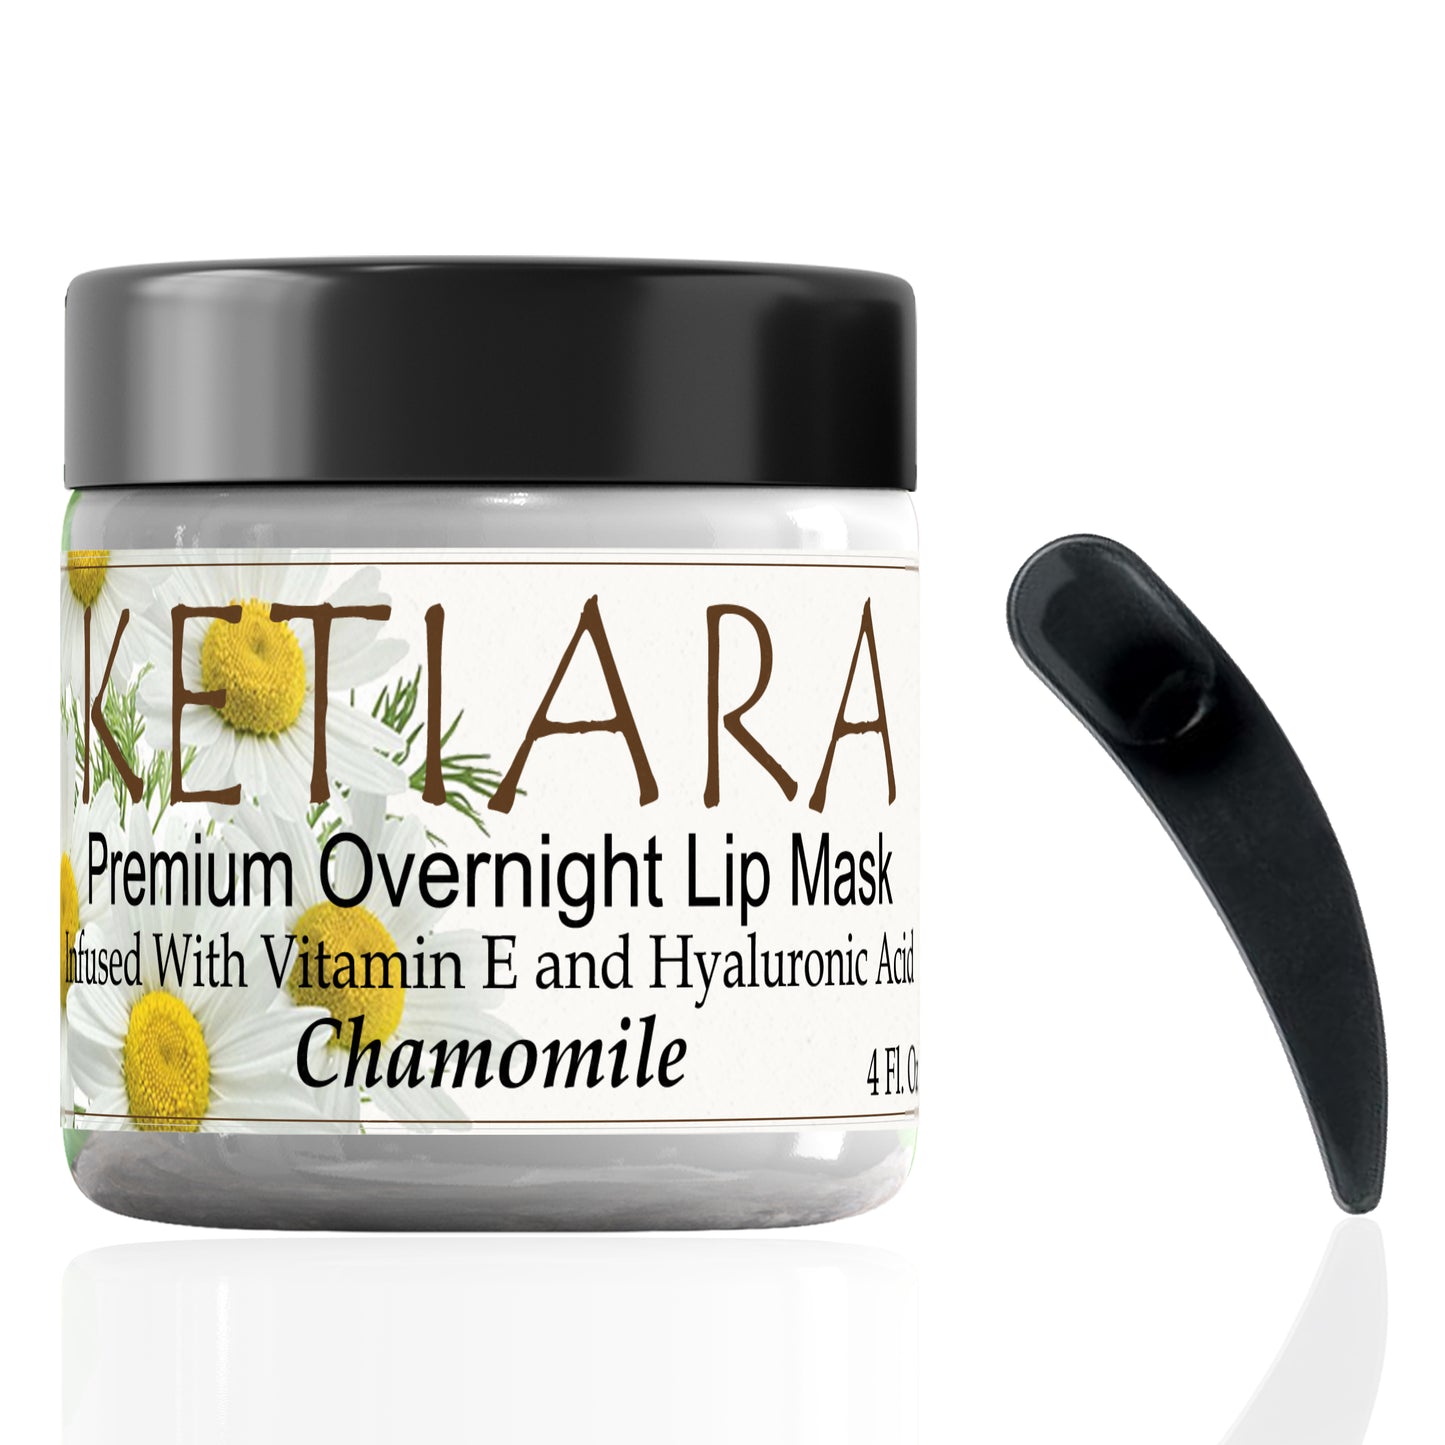 Ketiara Chamomile Nourishing and Hydrating Lip Sleeping Mask with Vitamin C, Hyaluronic Acid and More